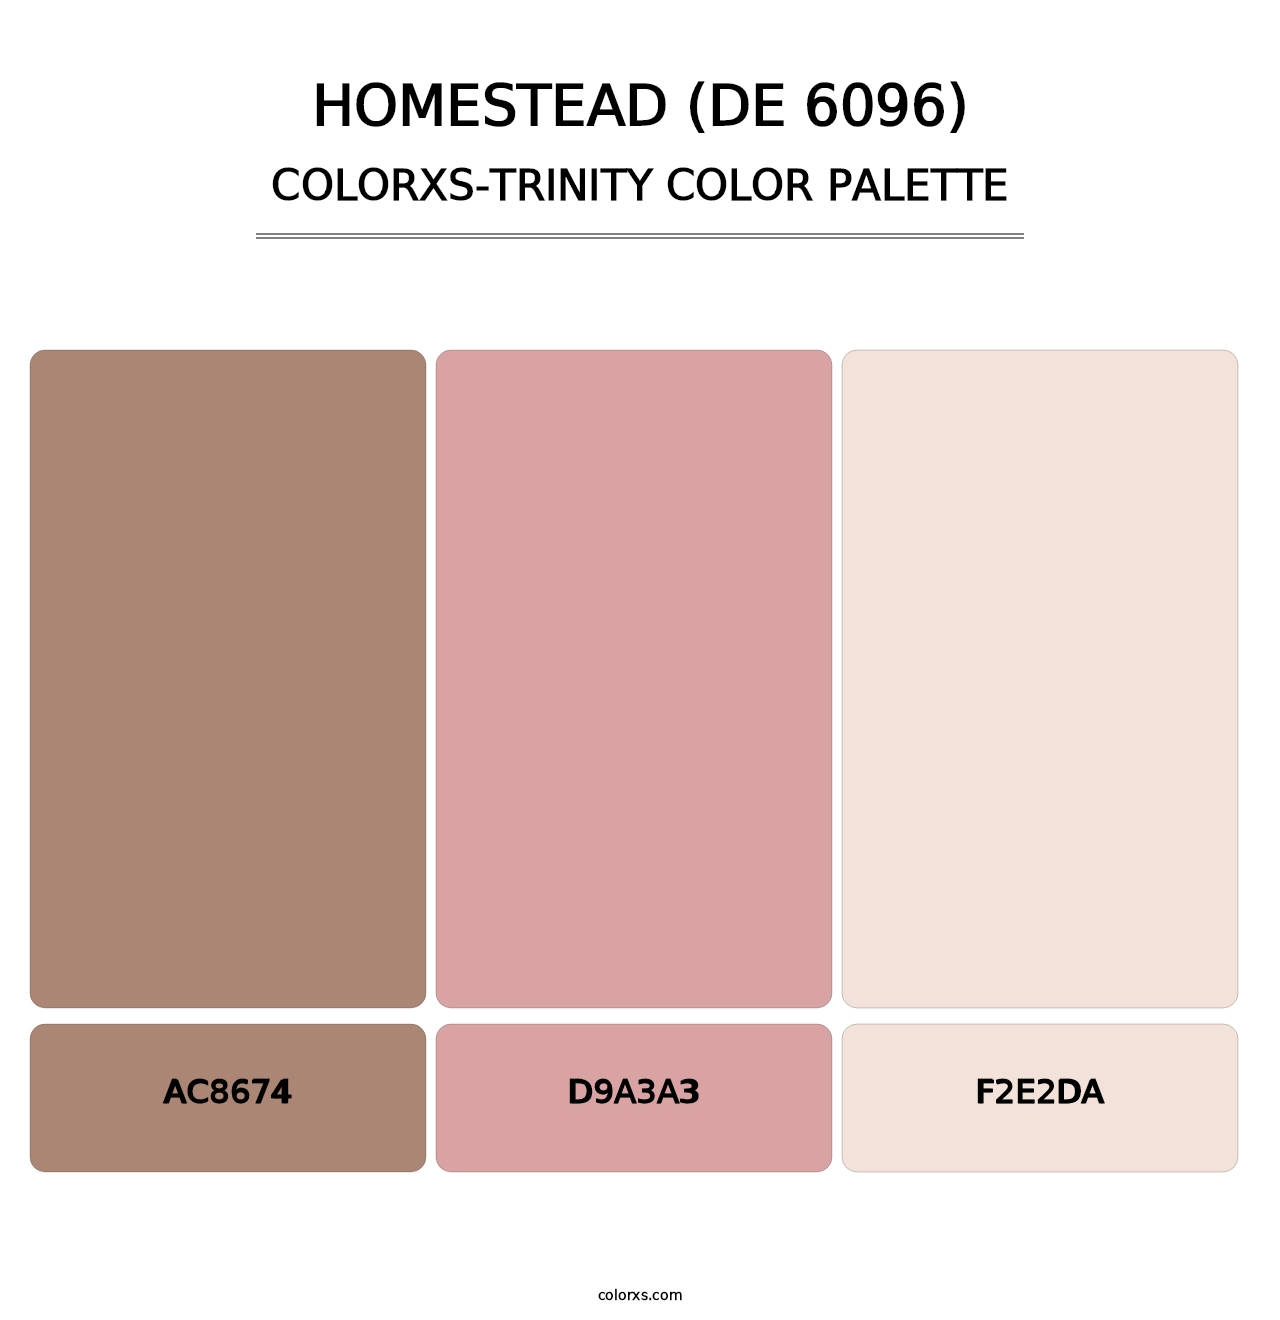 Homestead (DE 6096) - Colorxs Trinity Palette